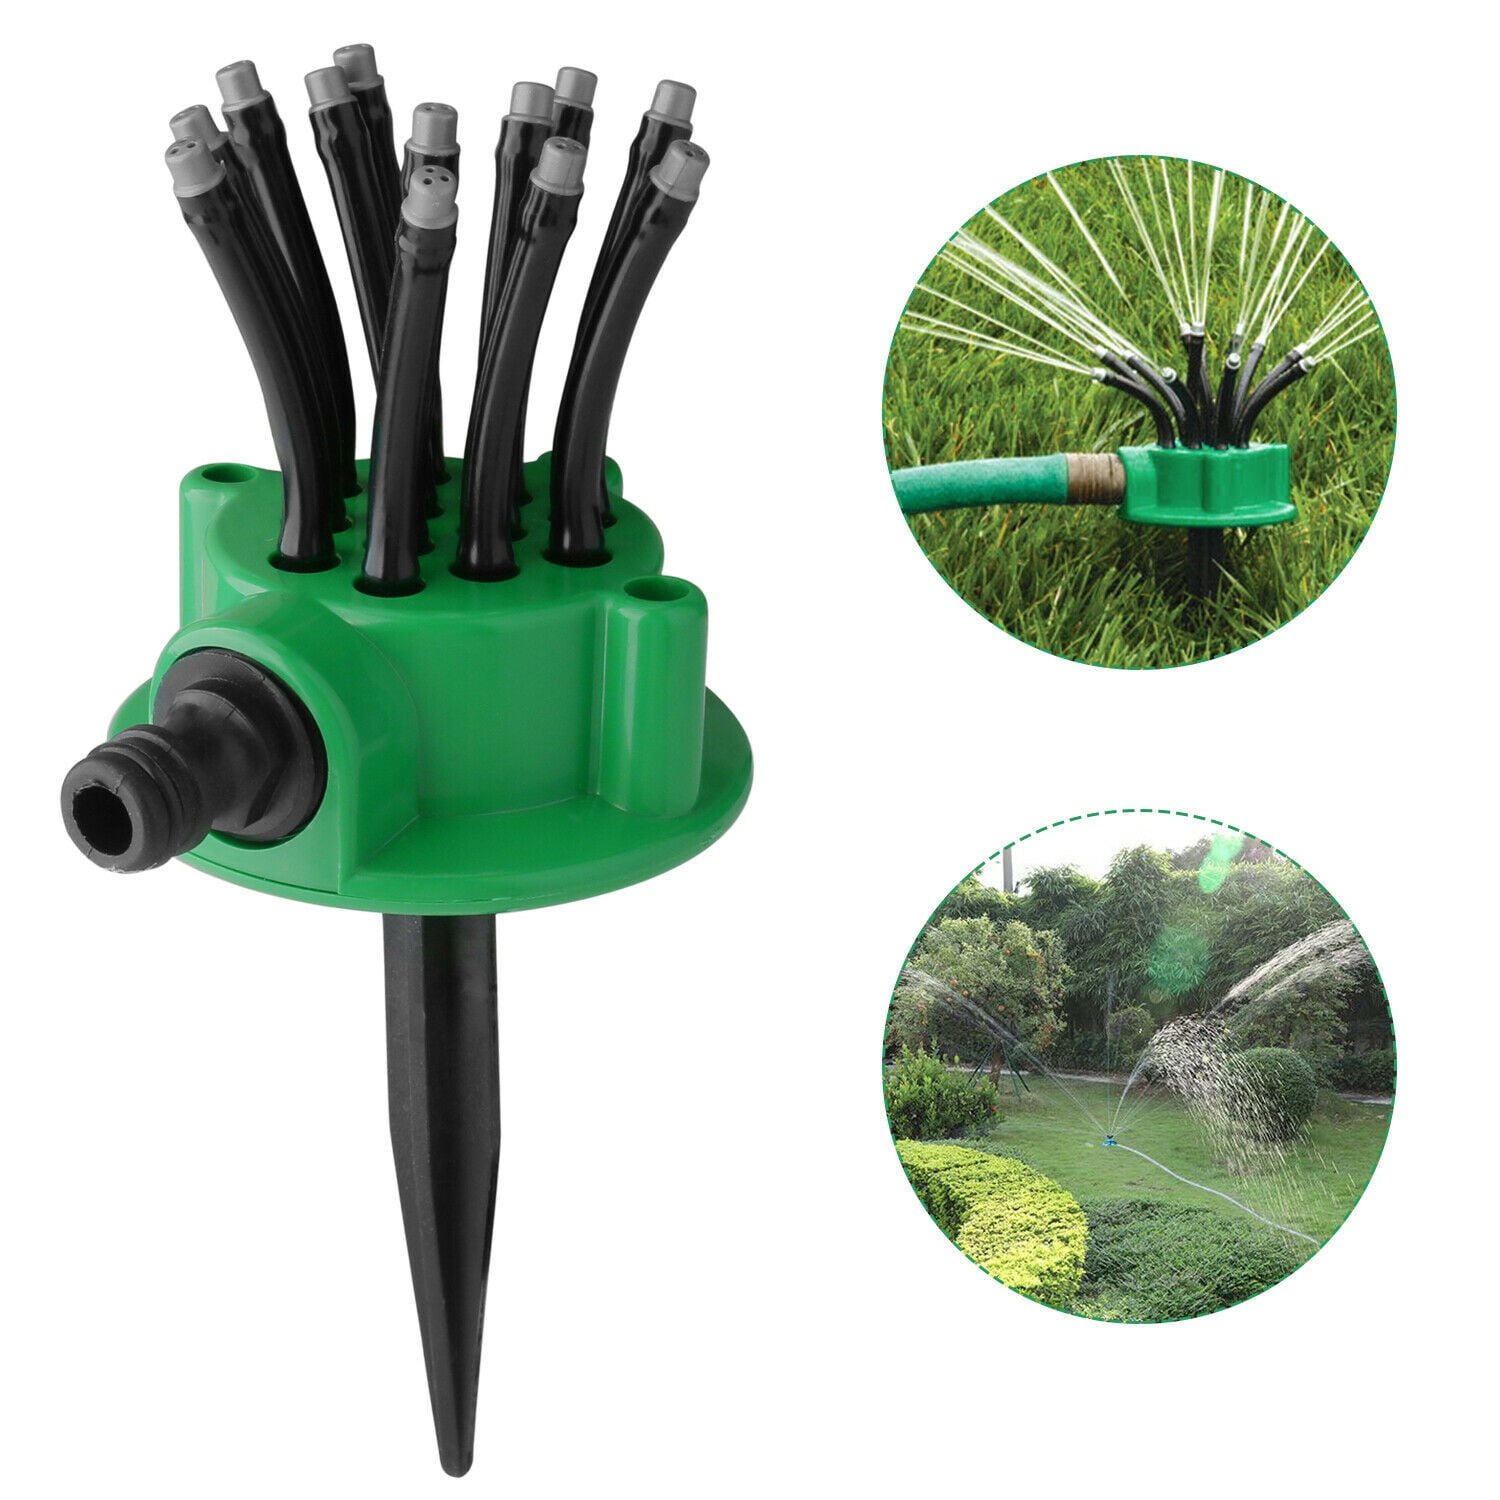 Lawn Water Spray Misting Nozzle Sprinkler Irrigation System Garden Tool 6T 